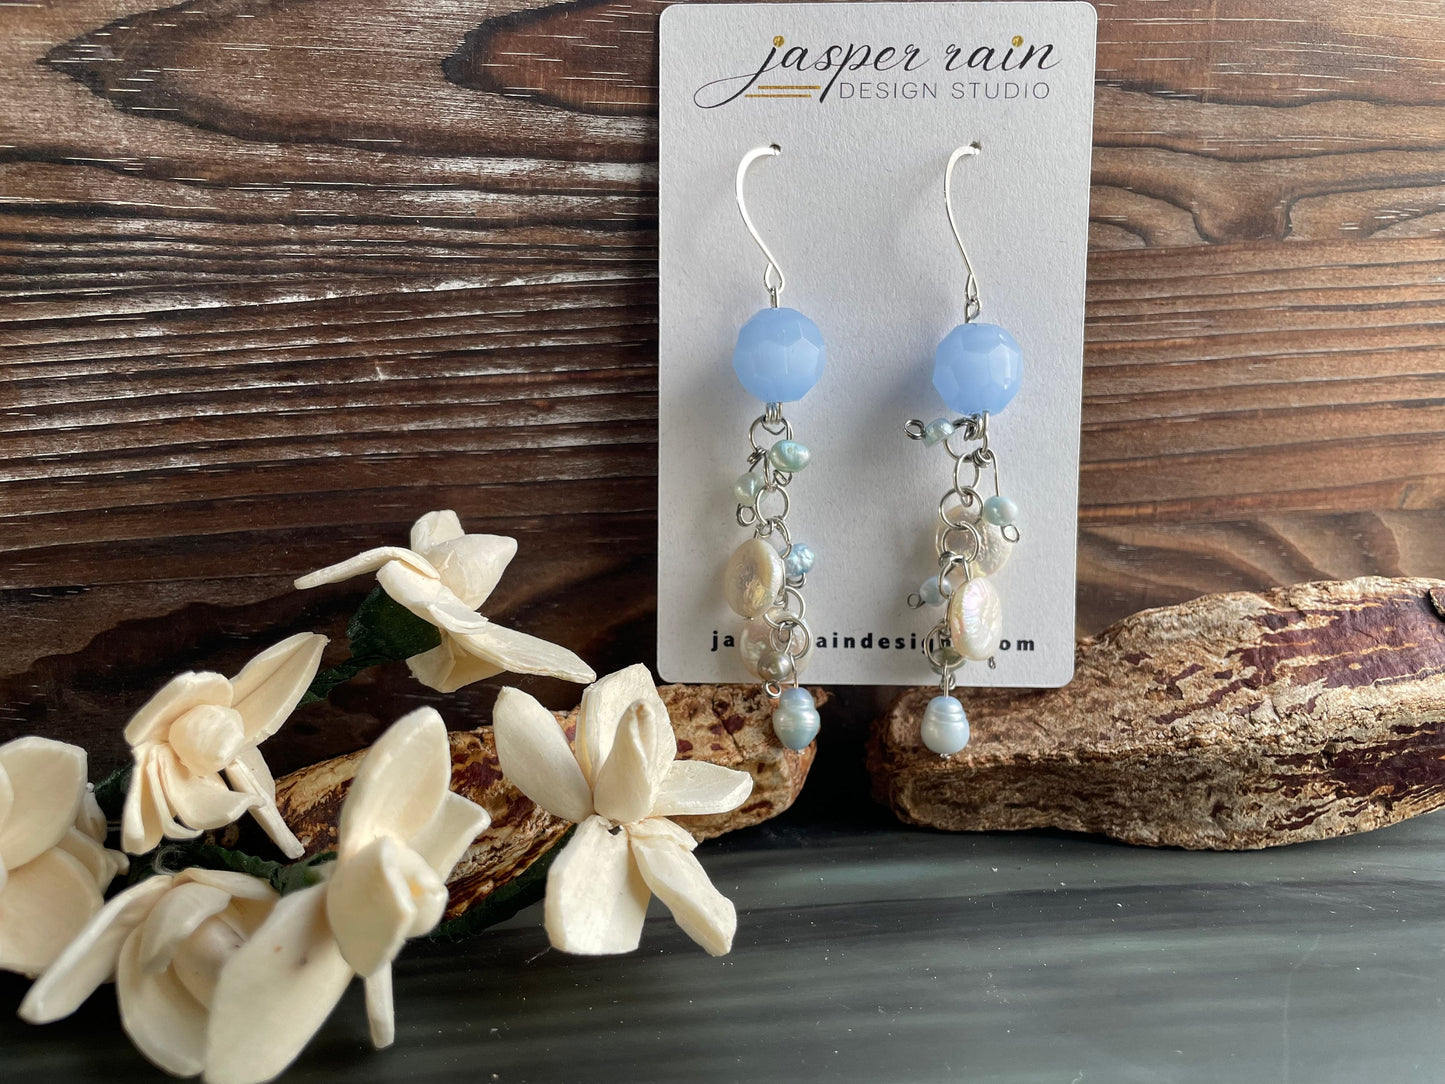 Elegant natural freshwater Pearl and agate drop handmade earrings